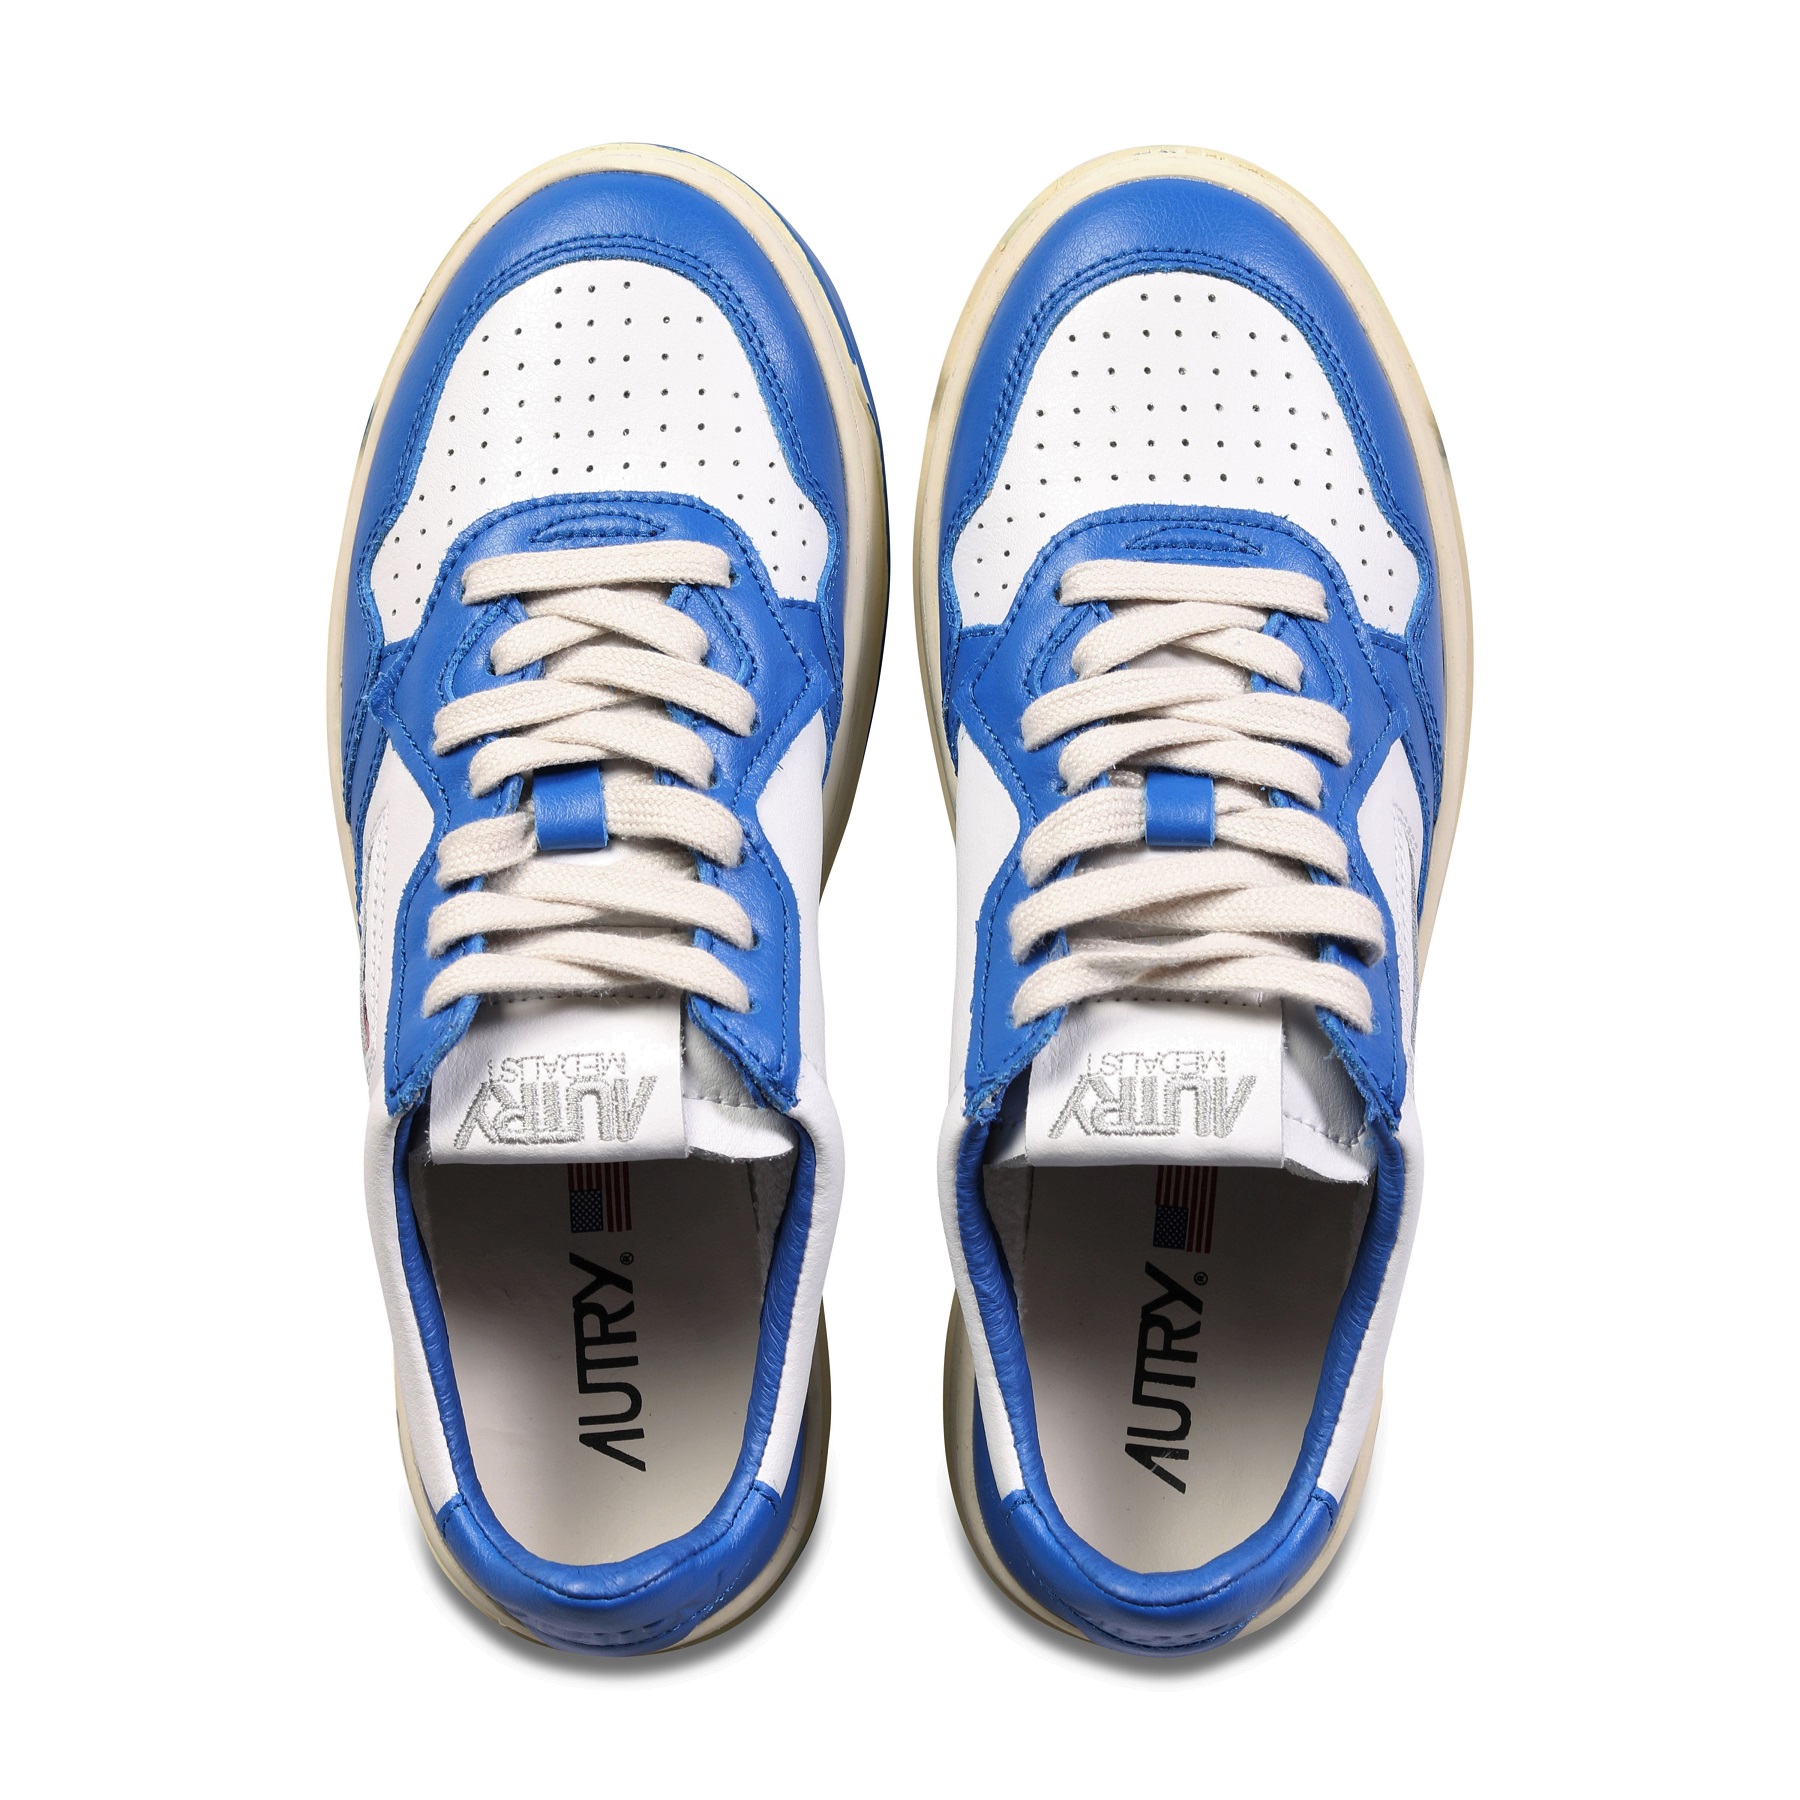 Autry Action Shoes Low Sneaker White/Princ Blue